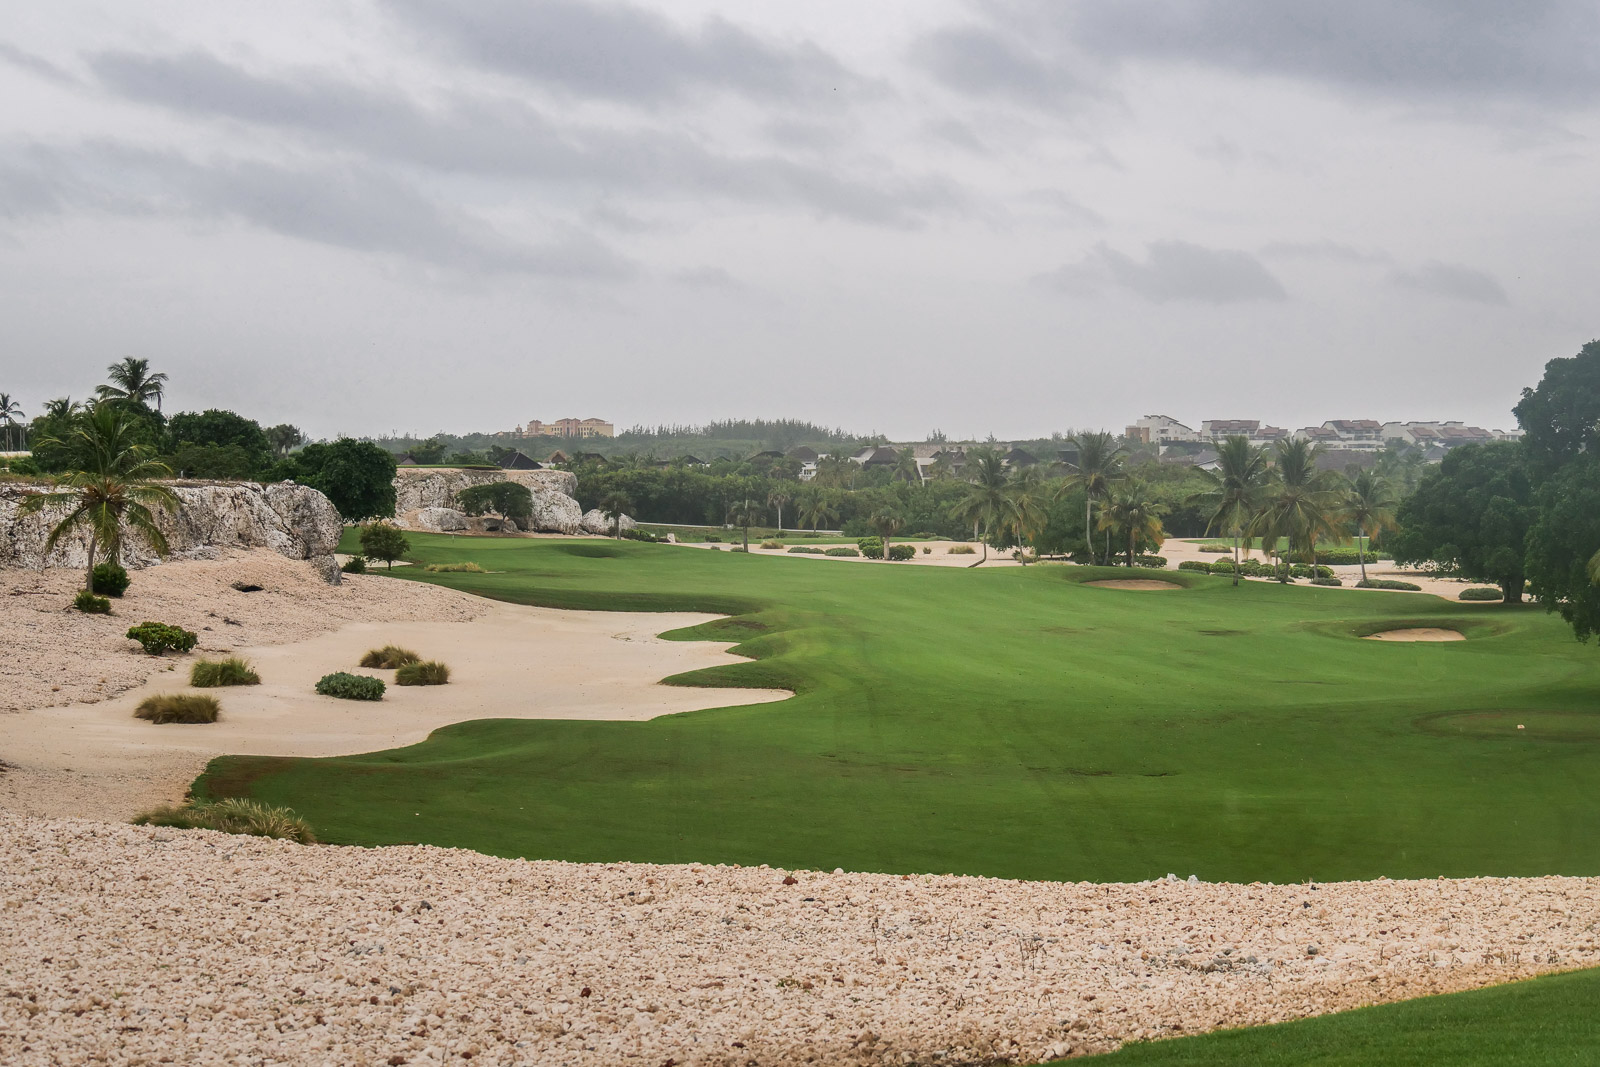 The first hole at Punta Espada Golf Club at Capa Cana, Dominican Republic.